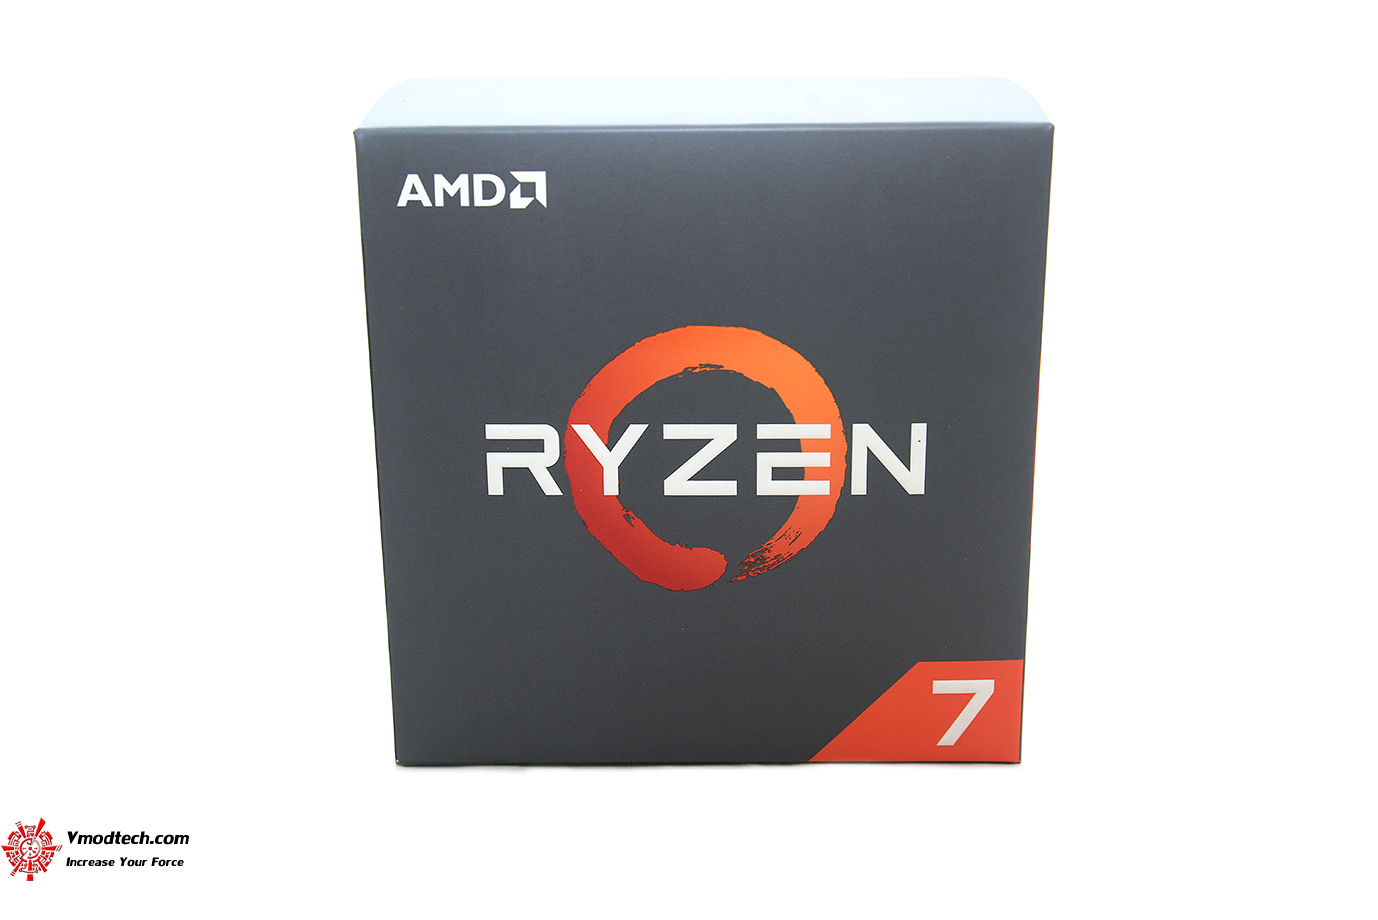 dsc 2305 AMD RYZEN 7 2700 and StoreMI Technology Review